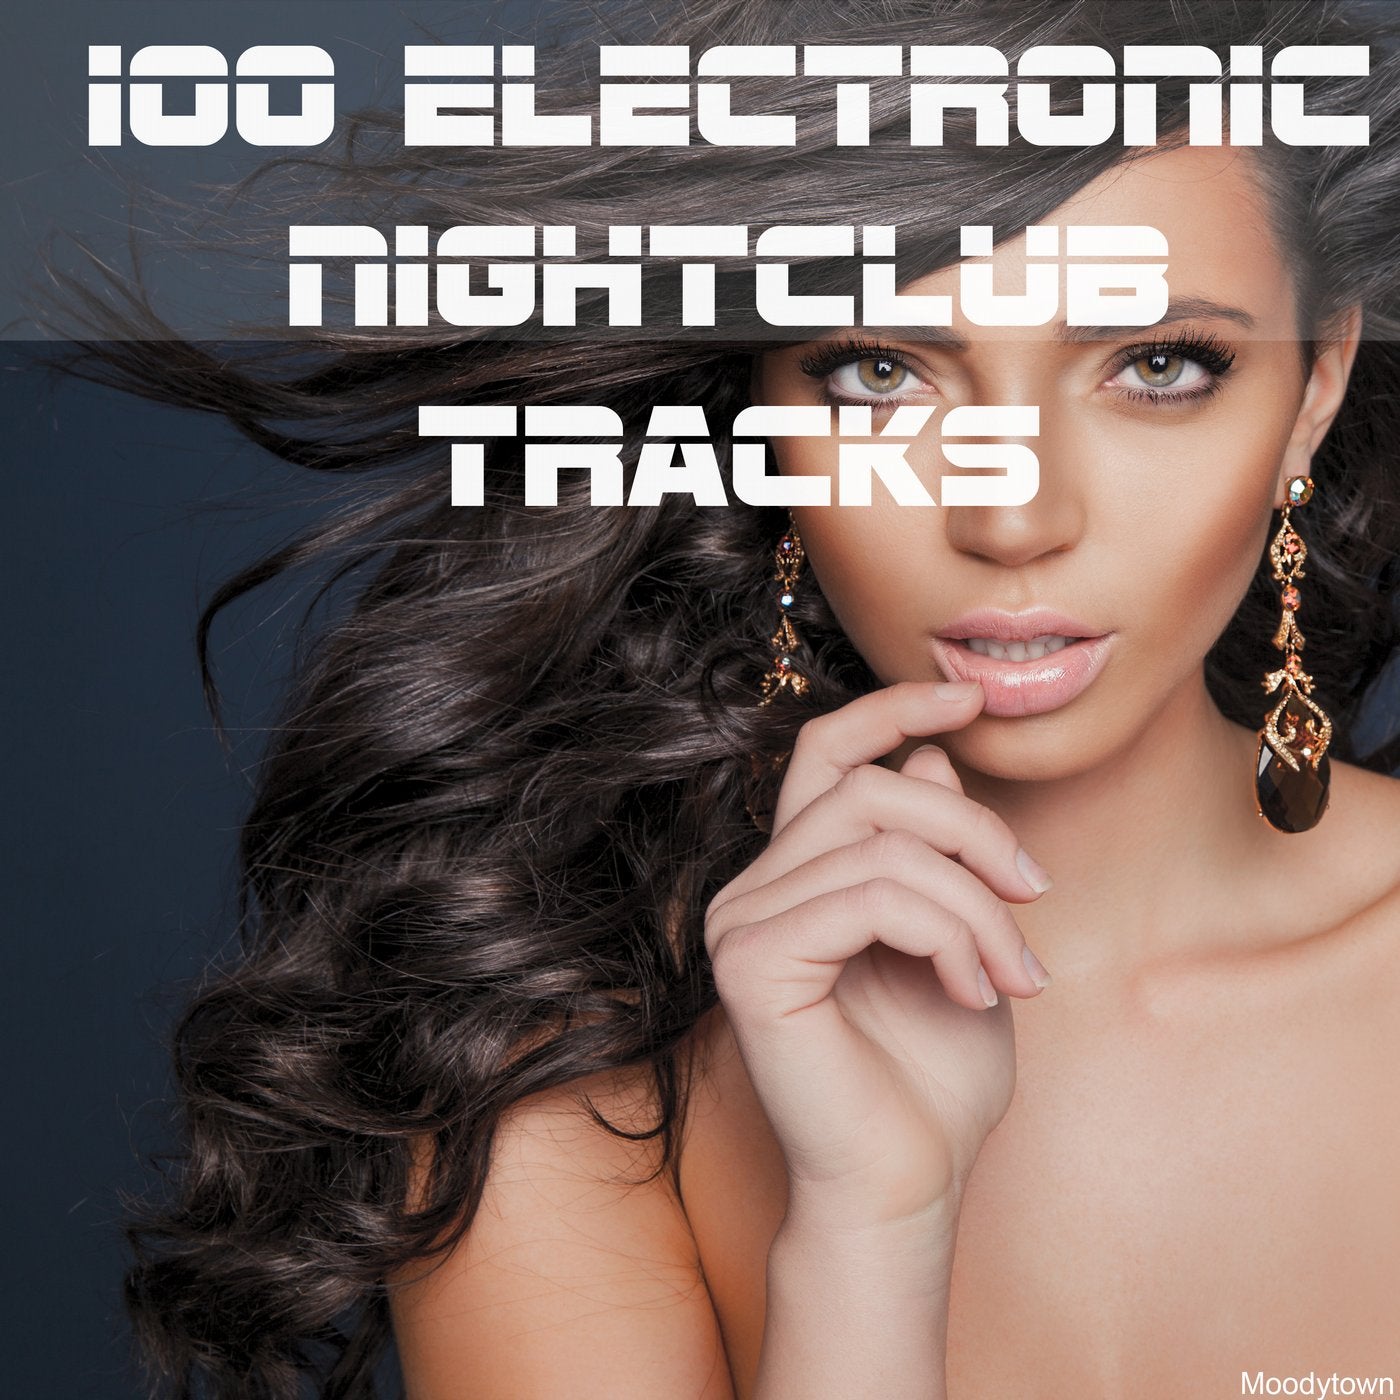 100 Electronic Nightclub Tracks